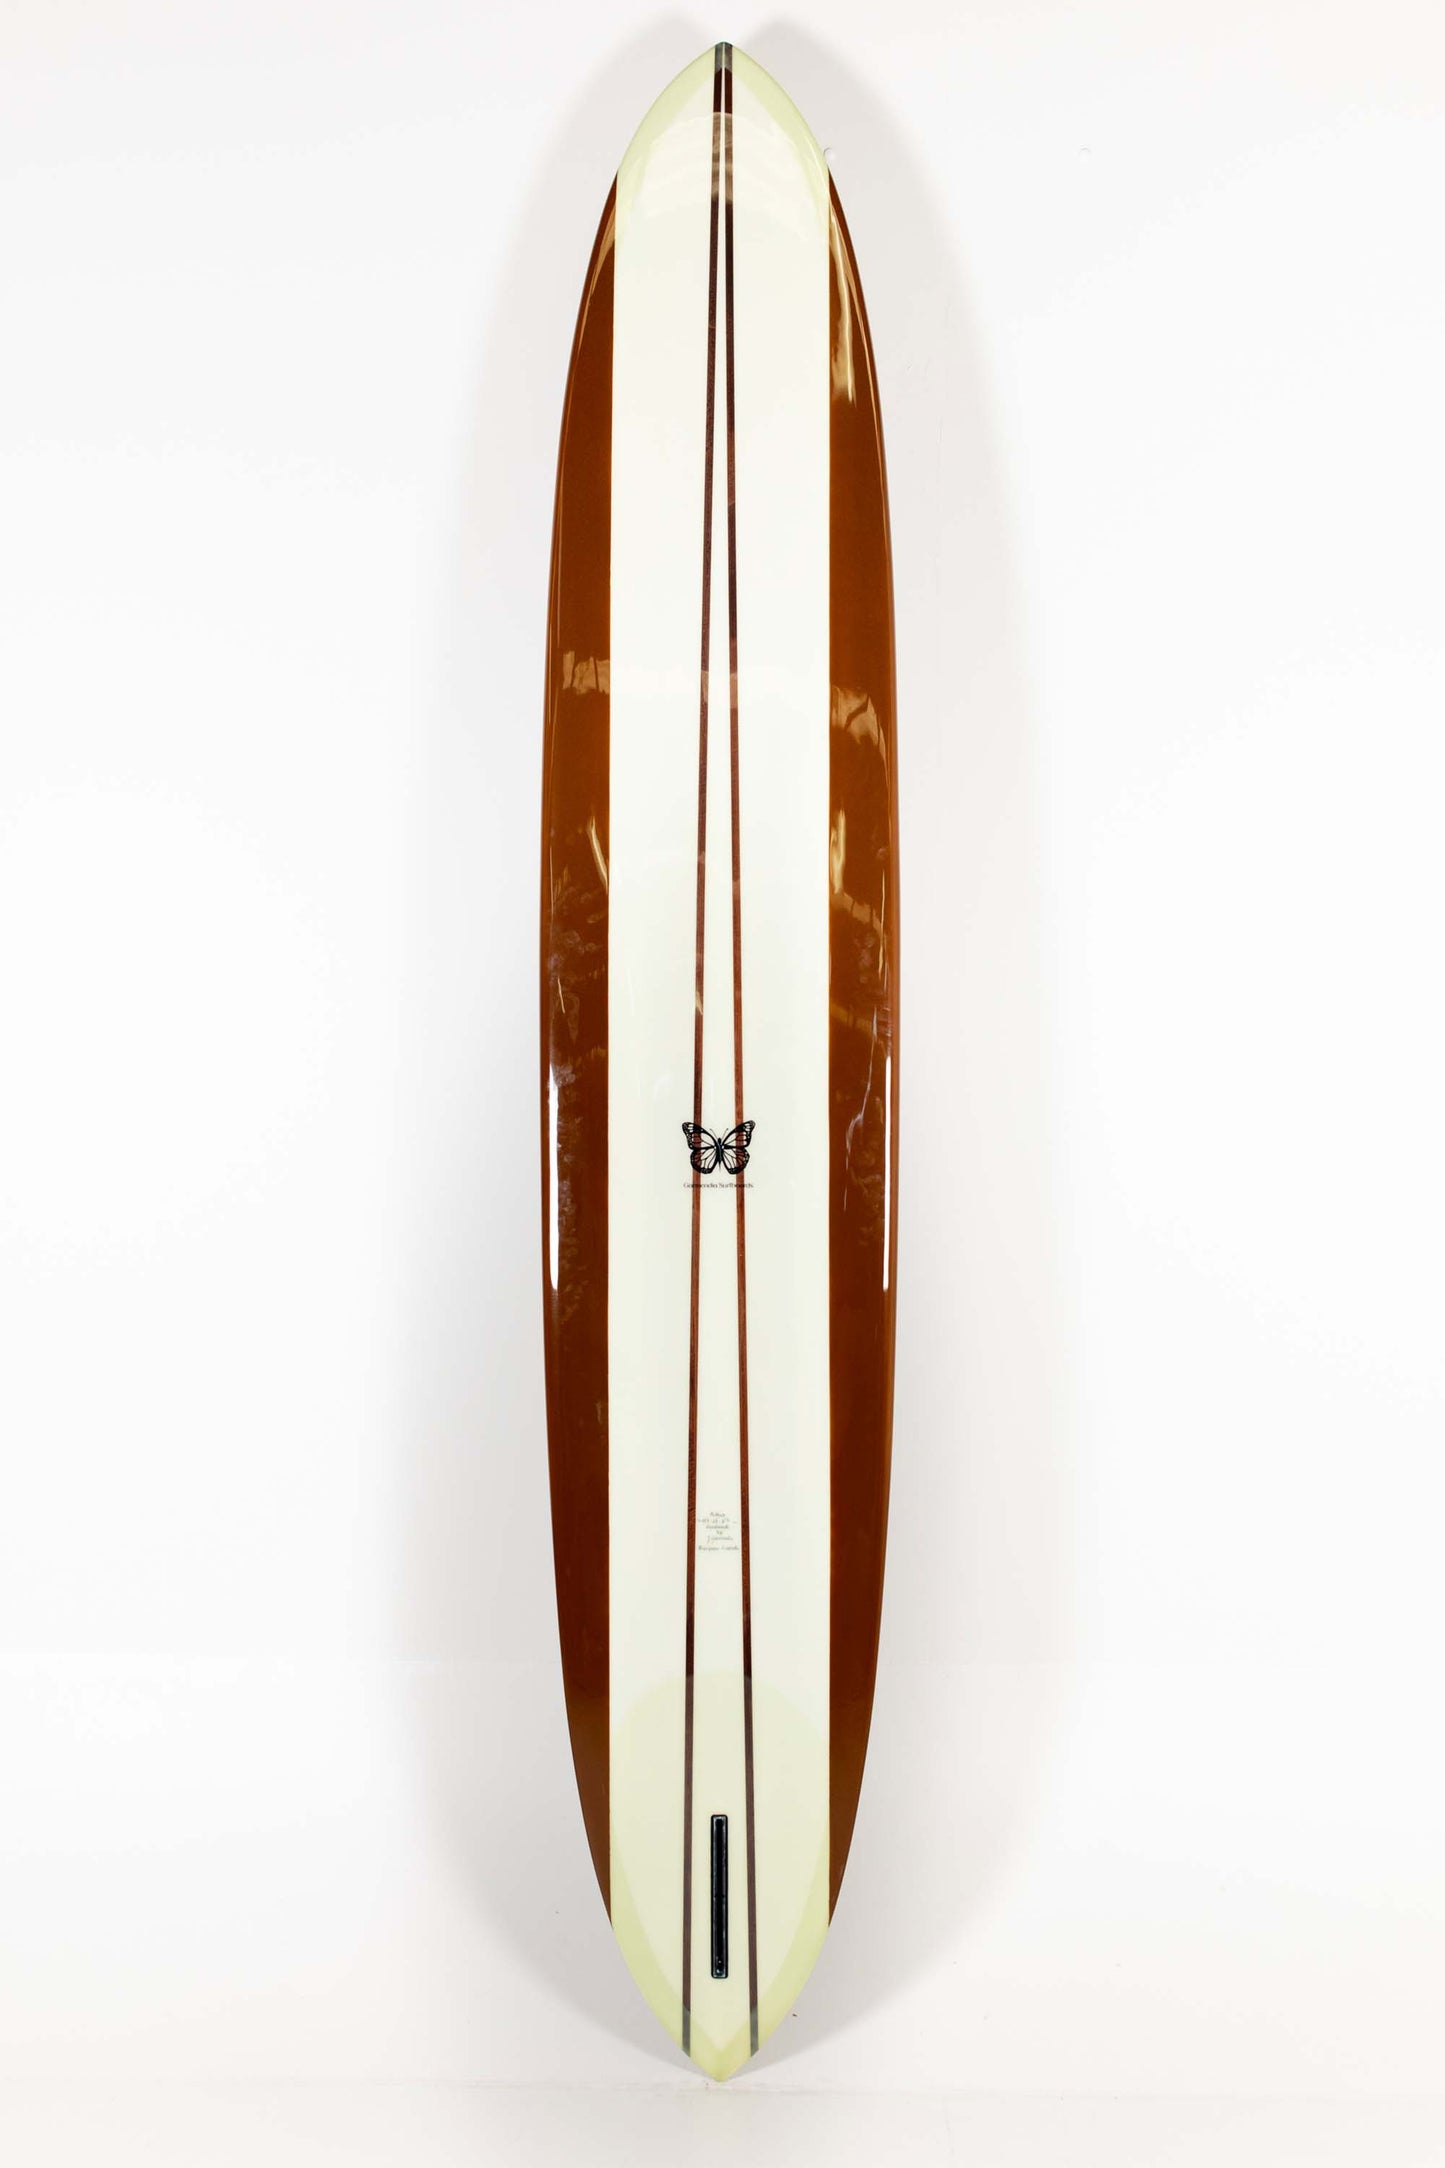 Pukas Surf Shop- Garmendia Surfboards - GLIDER DREAMER- 11'1" x 23 x 3 1/2